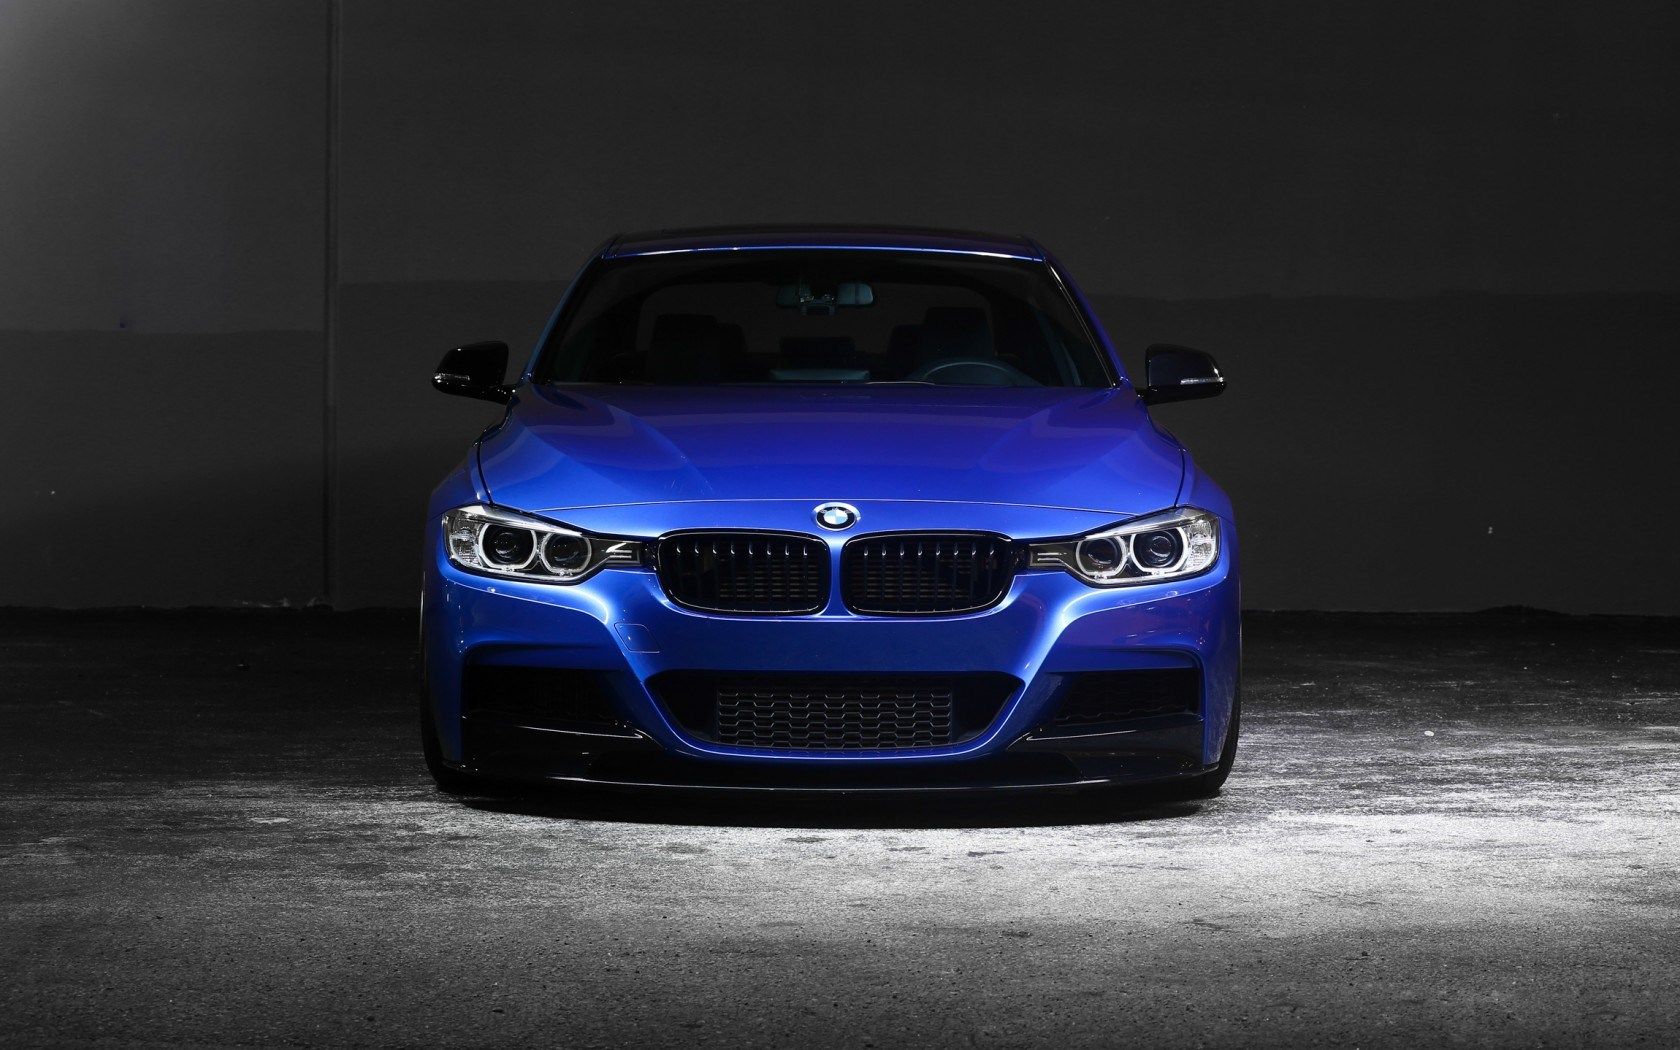 Free download BMW 335i F30 Car Blue Front Night wallpaper